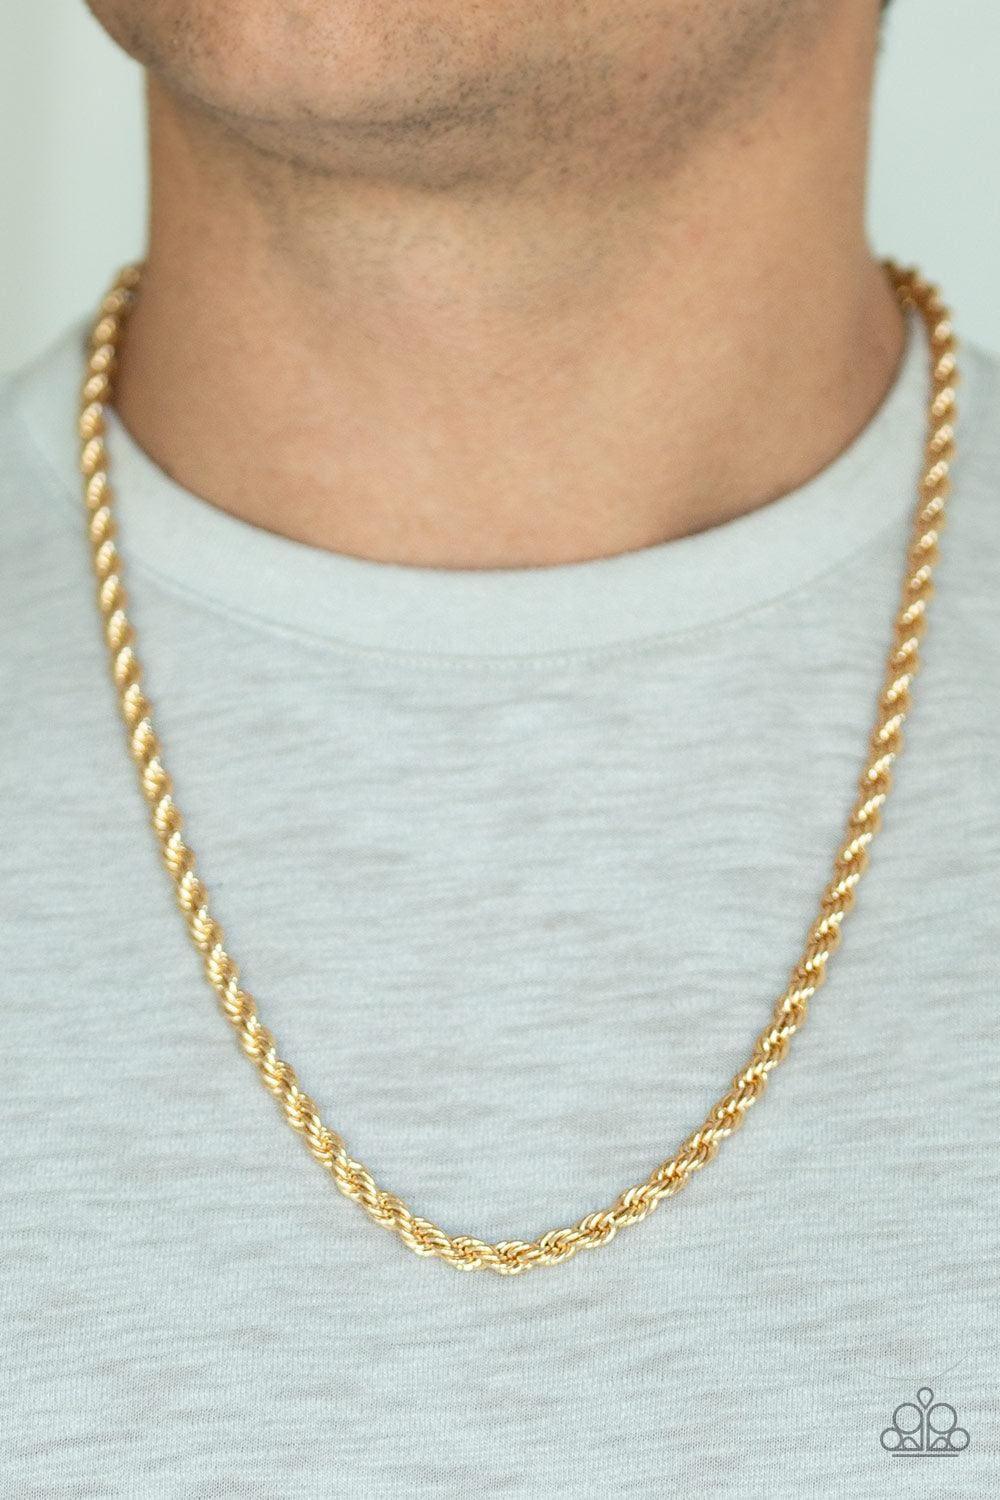 Paparazzi Accessories - Double Dribble - Gold Men's Necklace - Bling by JessieK